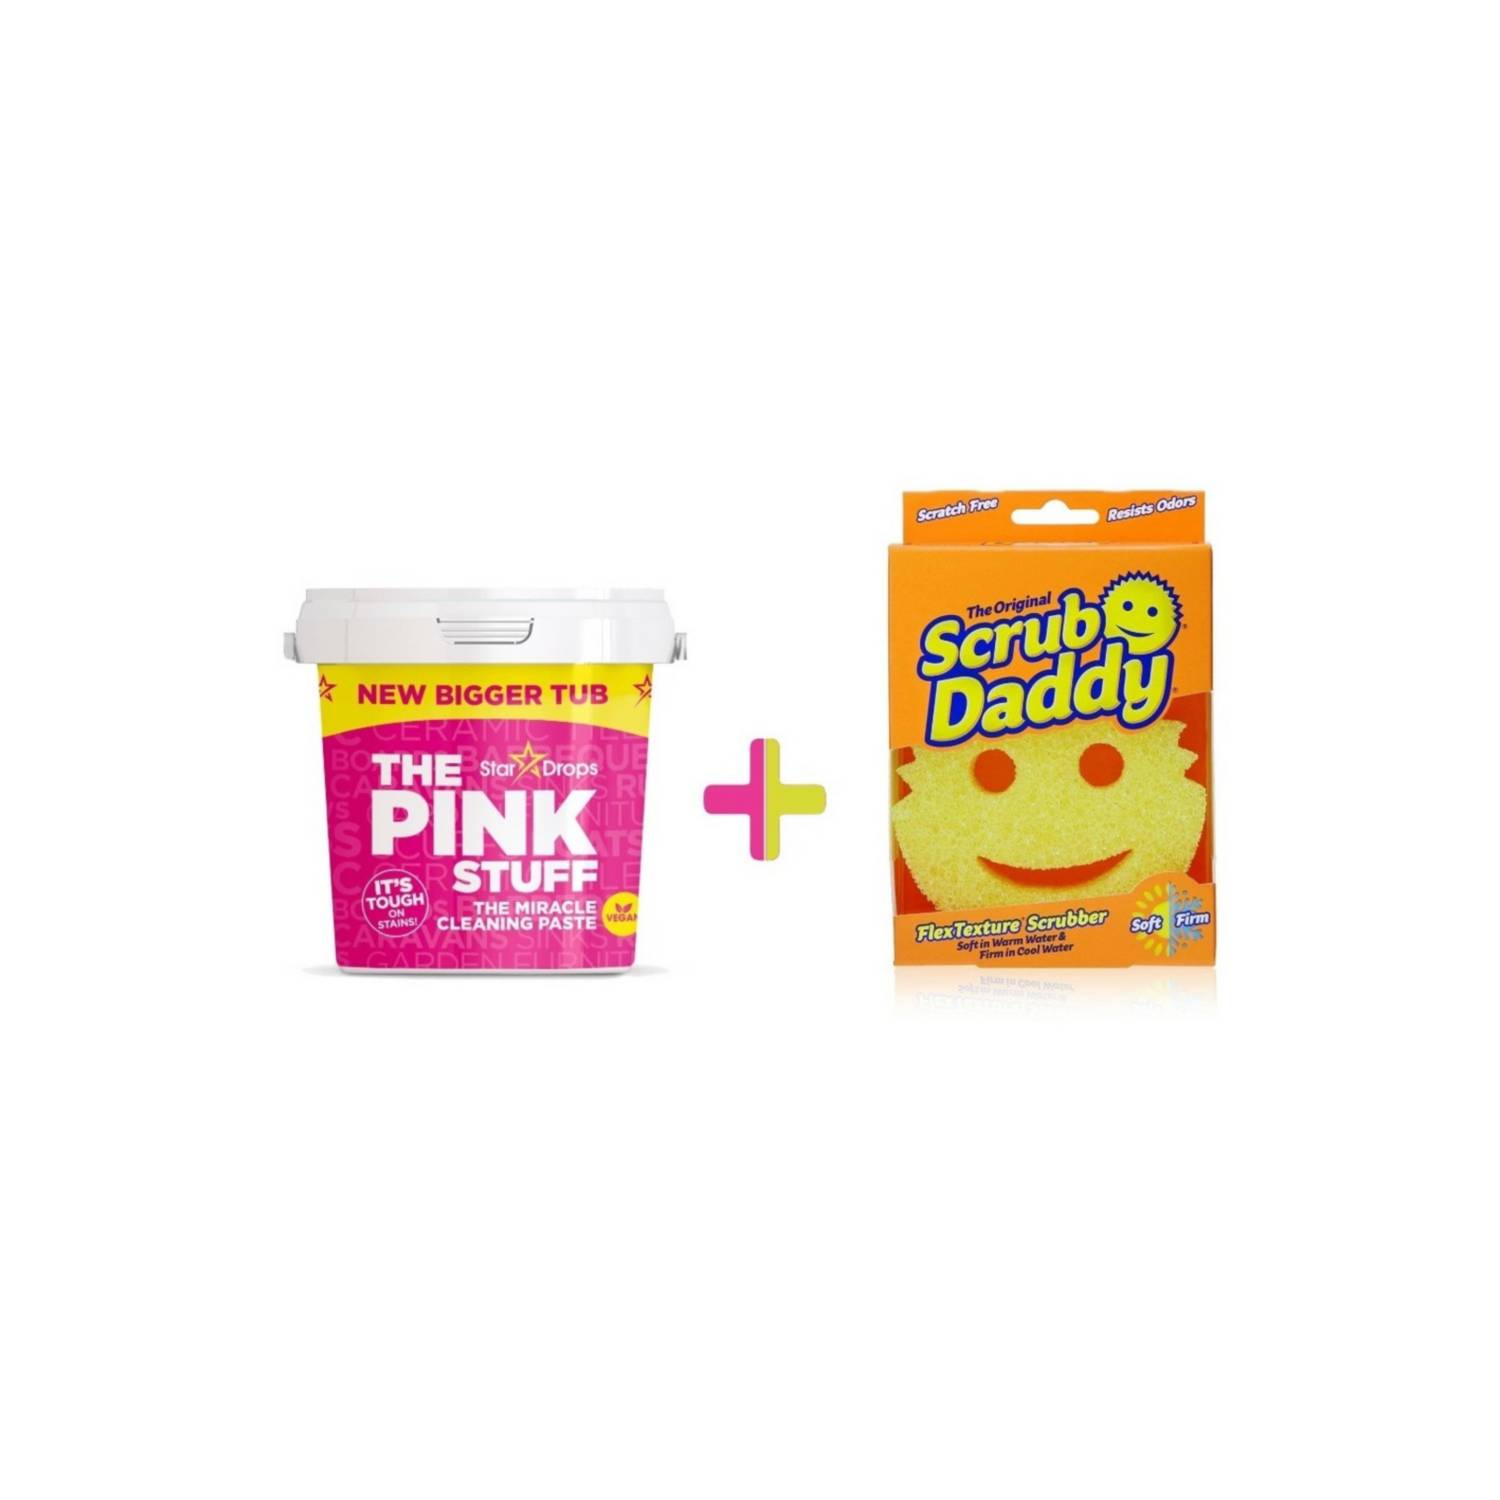 THE PINK STUFF Pasta Multiuso The Pink Stuff 850 Gr + Esponja Scrub Daddy  THE PINK STUFF